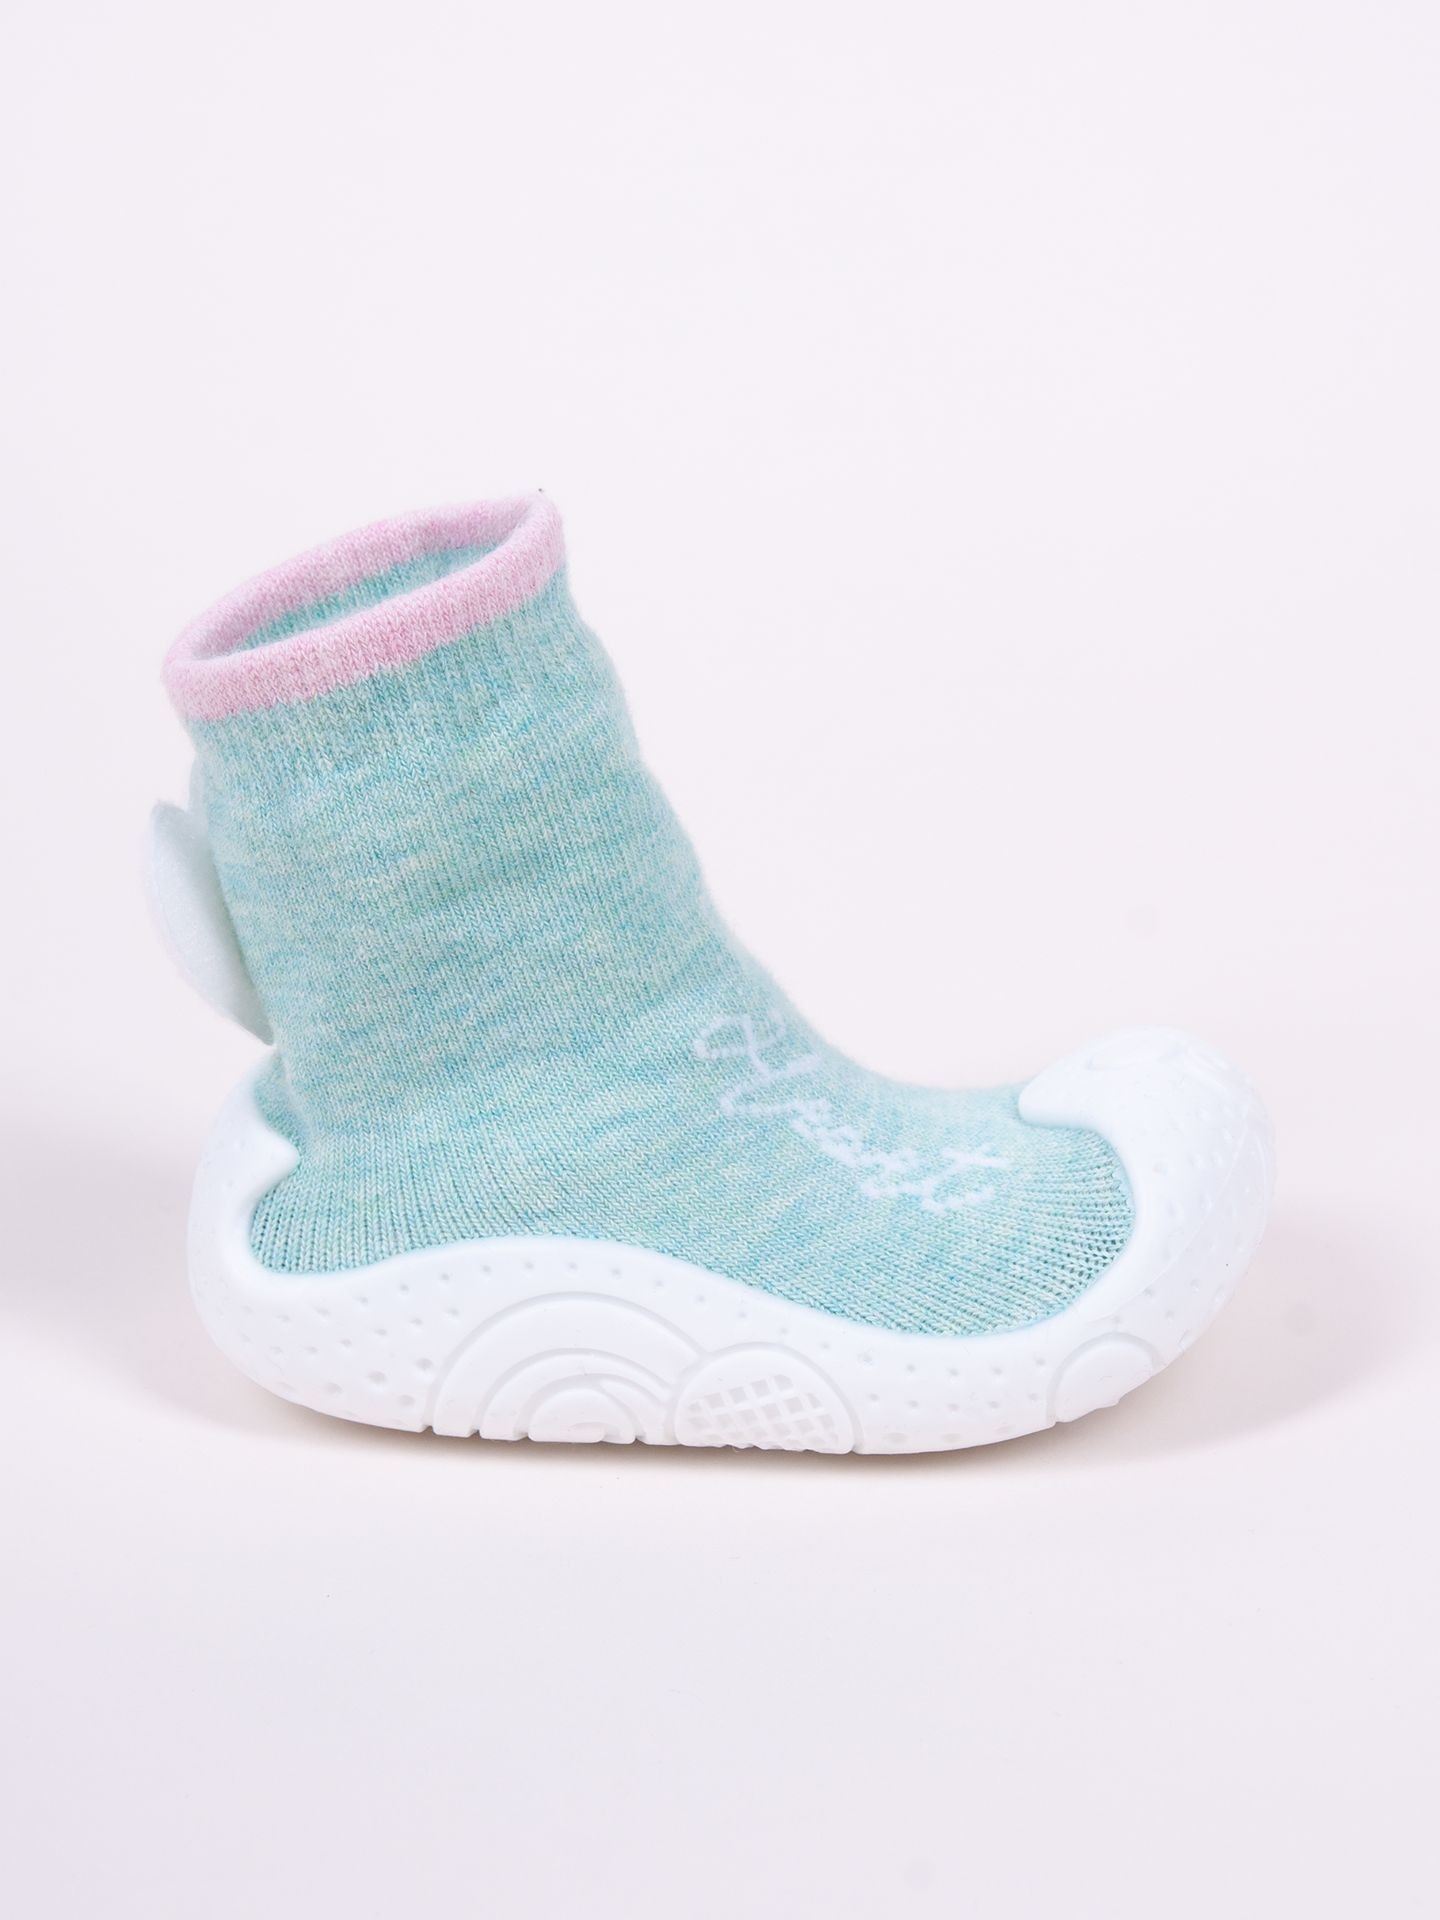 Yoclub Kids's Baby Anti-Skid Socks With Rubber Sole OB-132/GIR/001